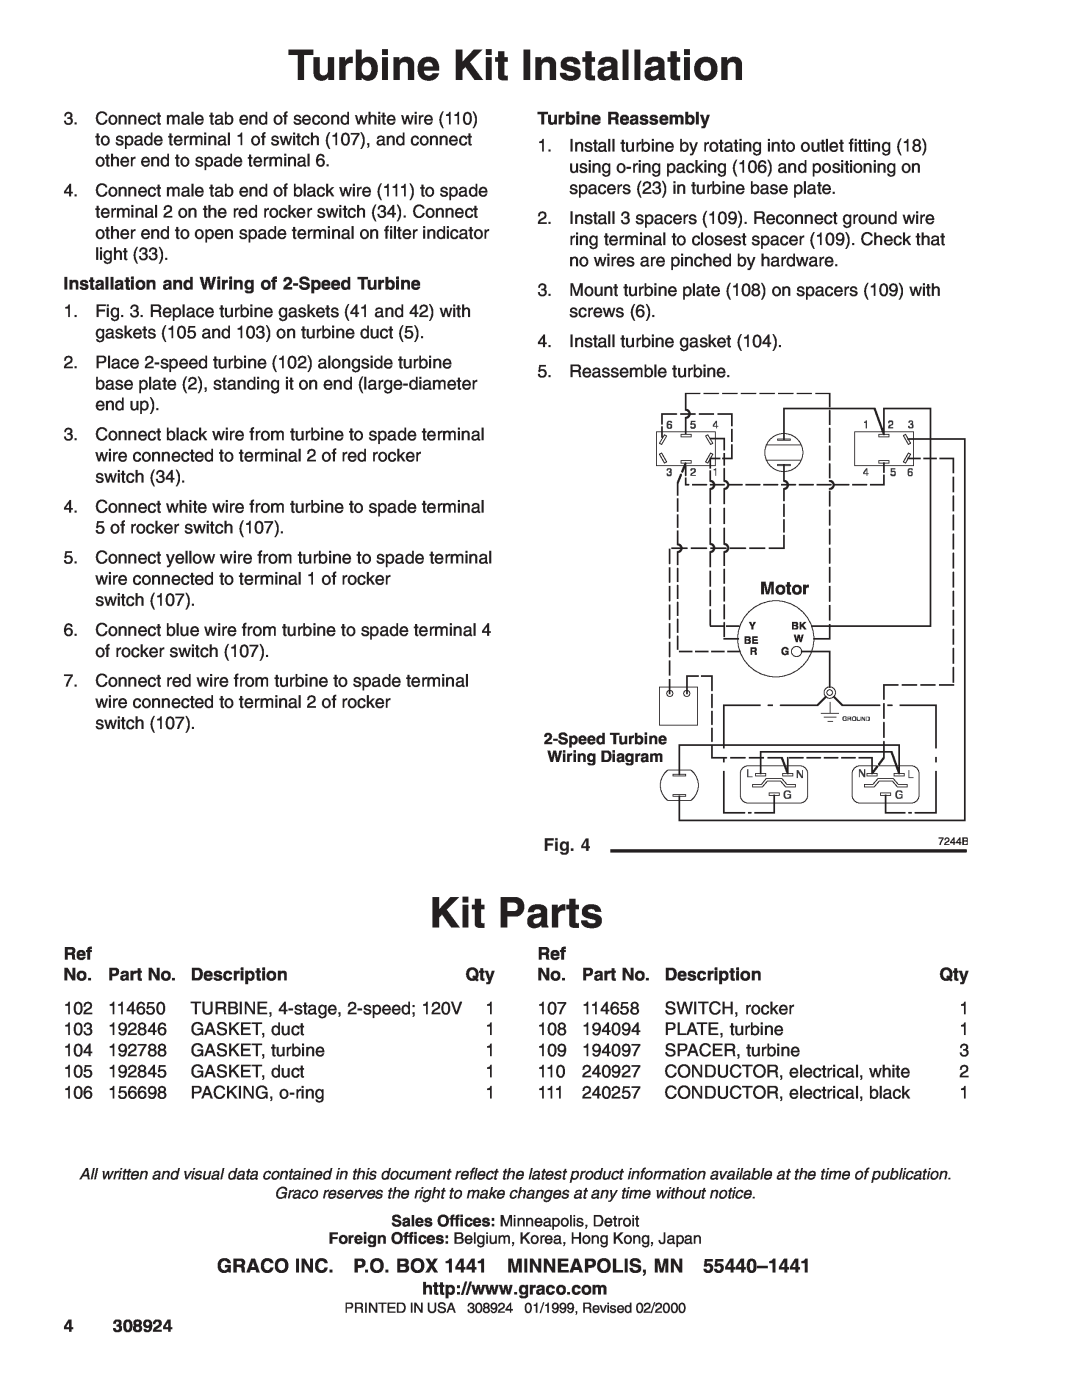 Graco Series A, 241123 manual Kit Parts, Turbine Kit Installation 